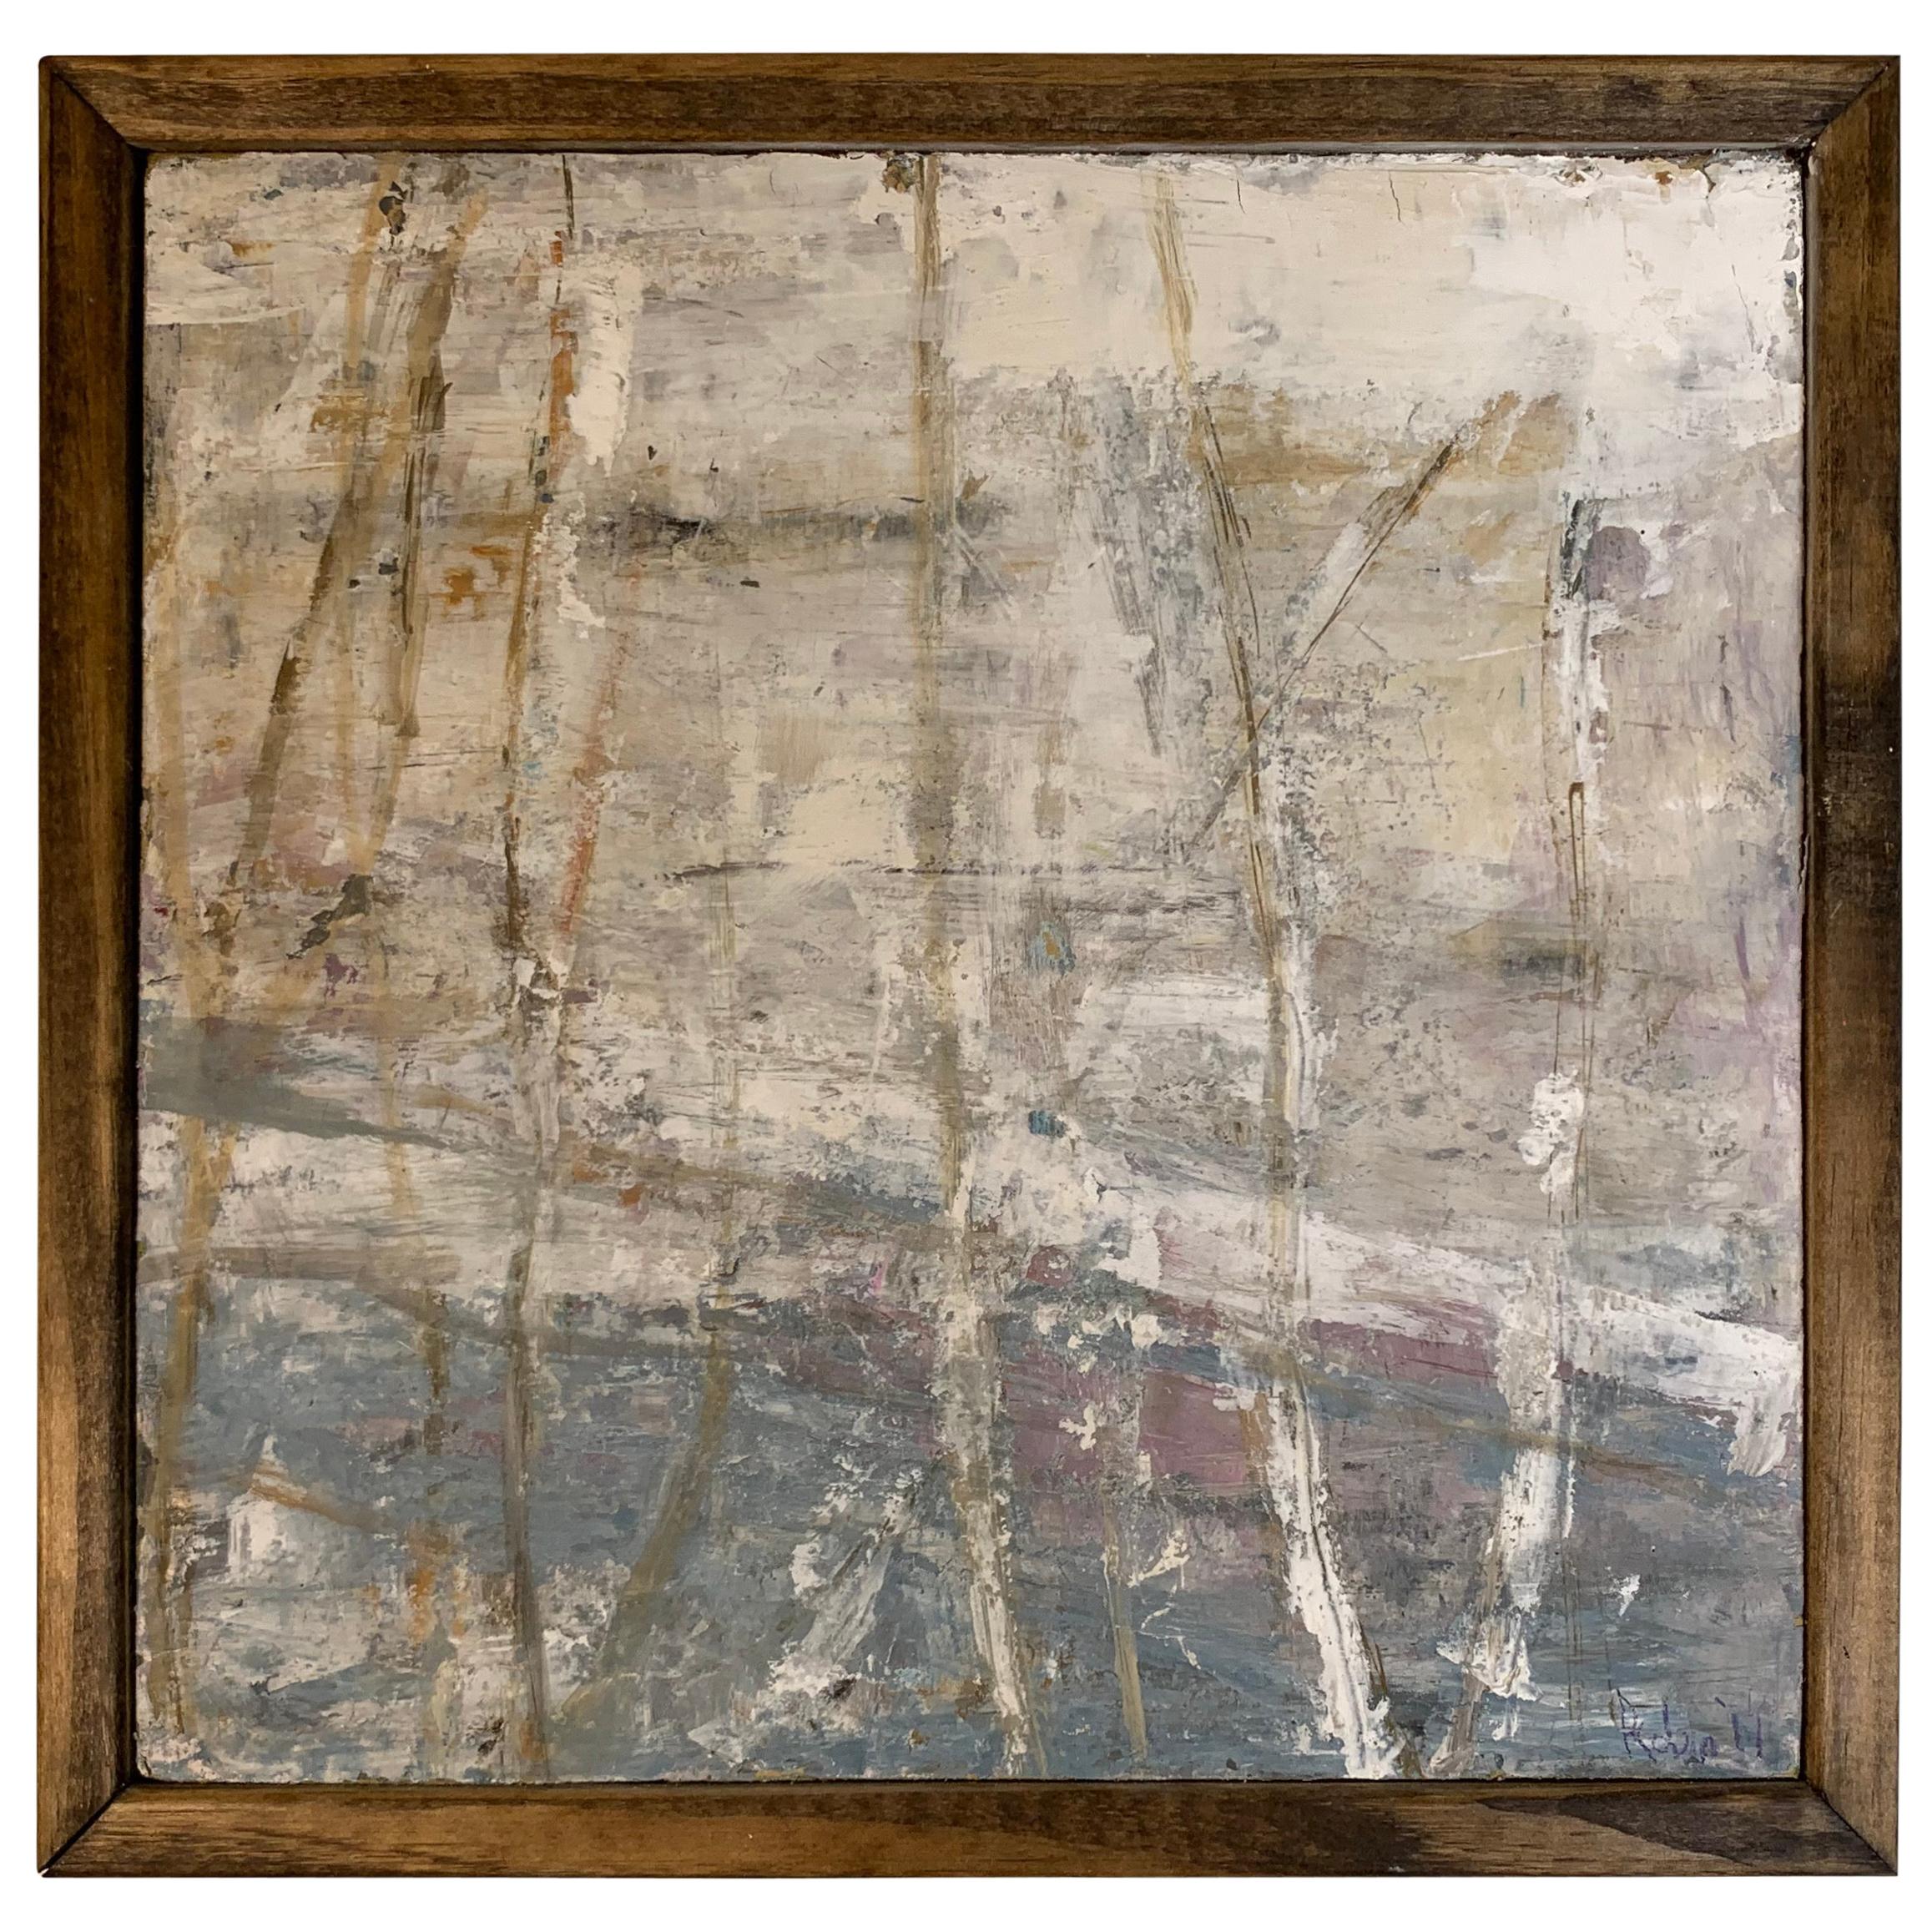 Robin Phillps, "Trees", Plaster on Board